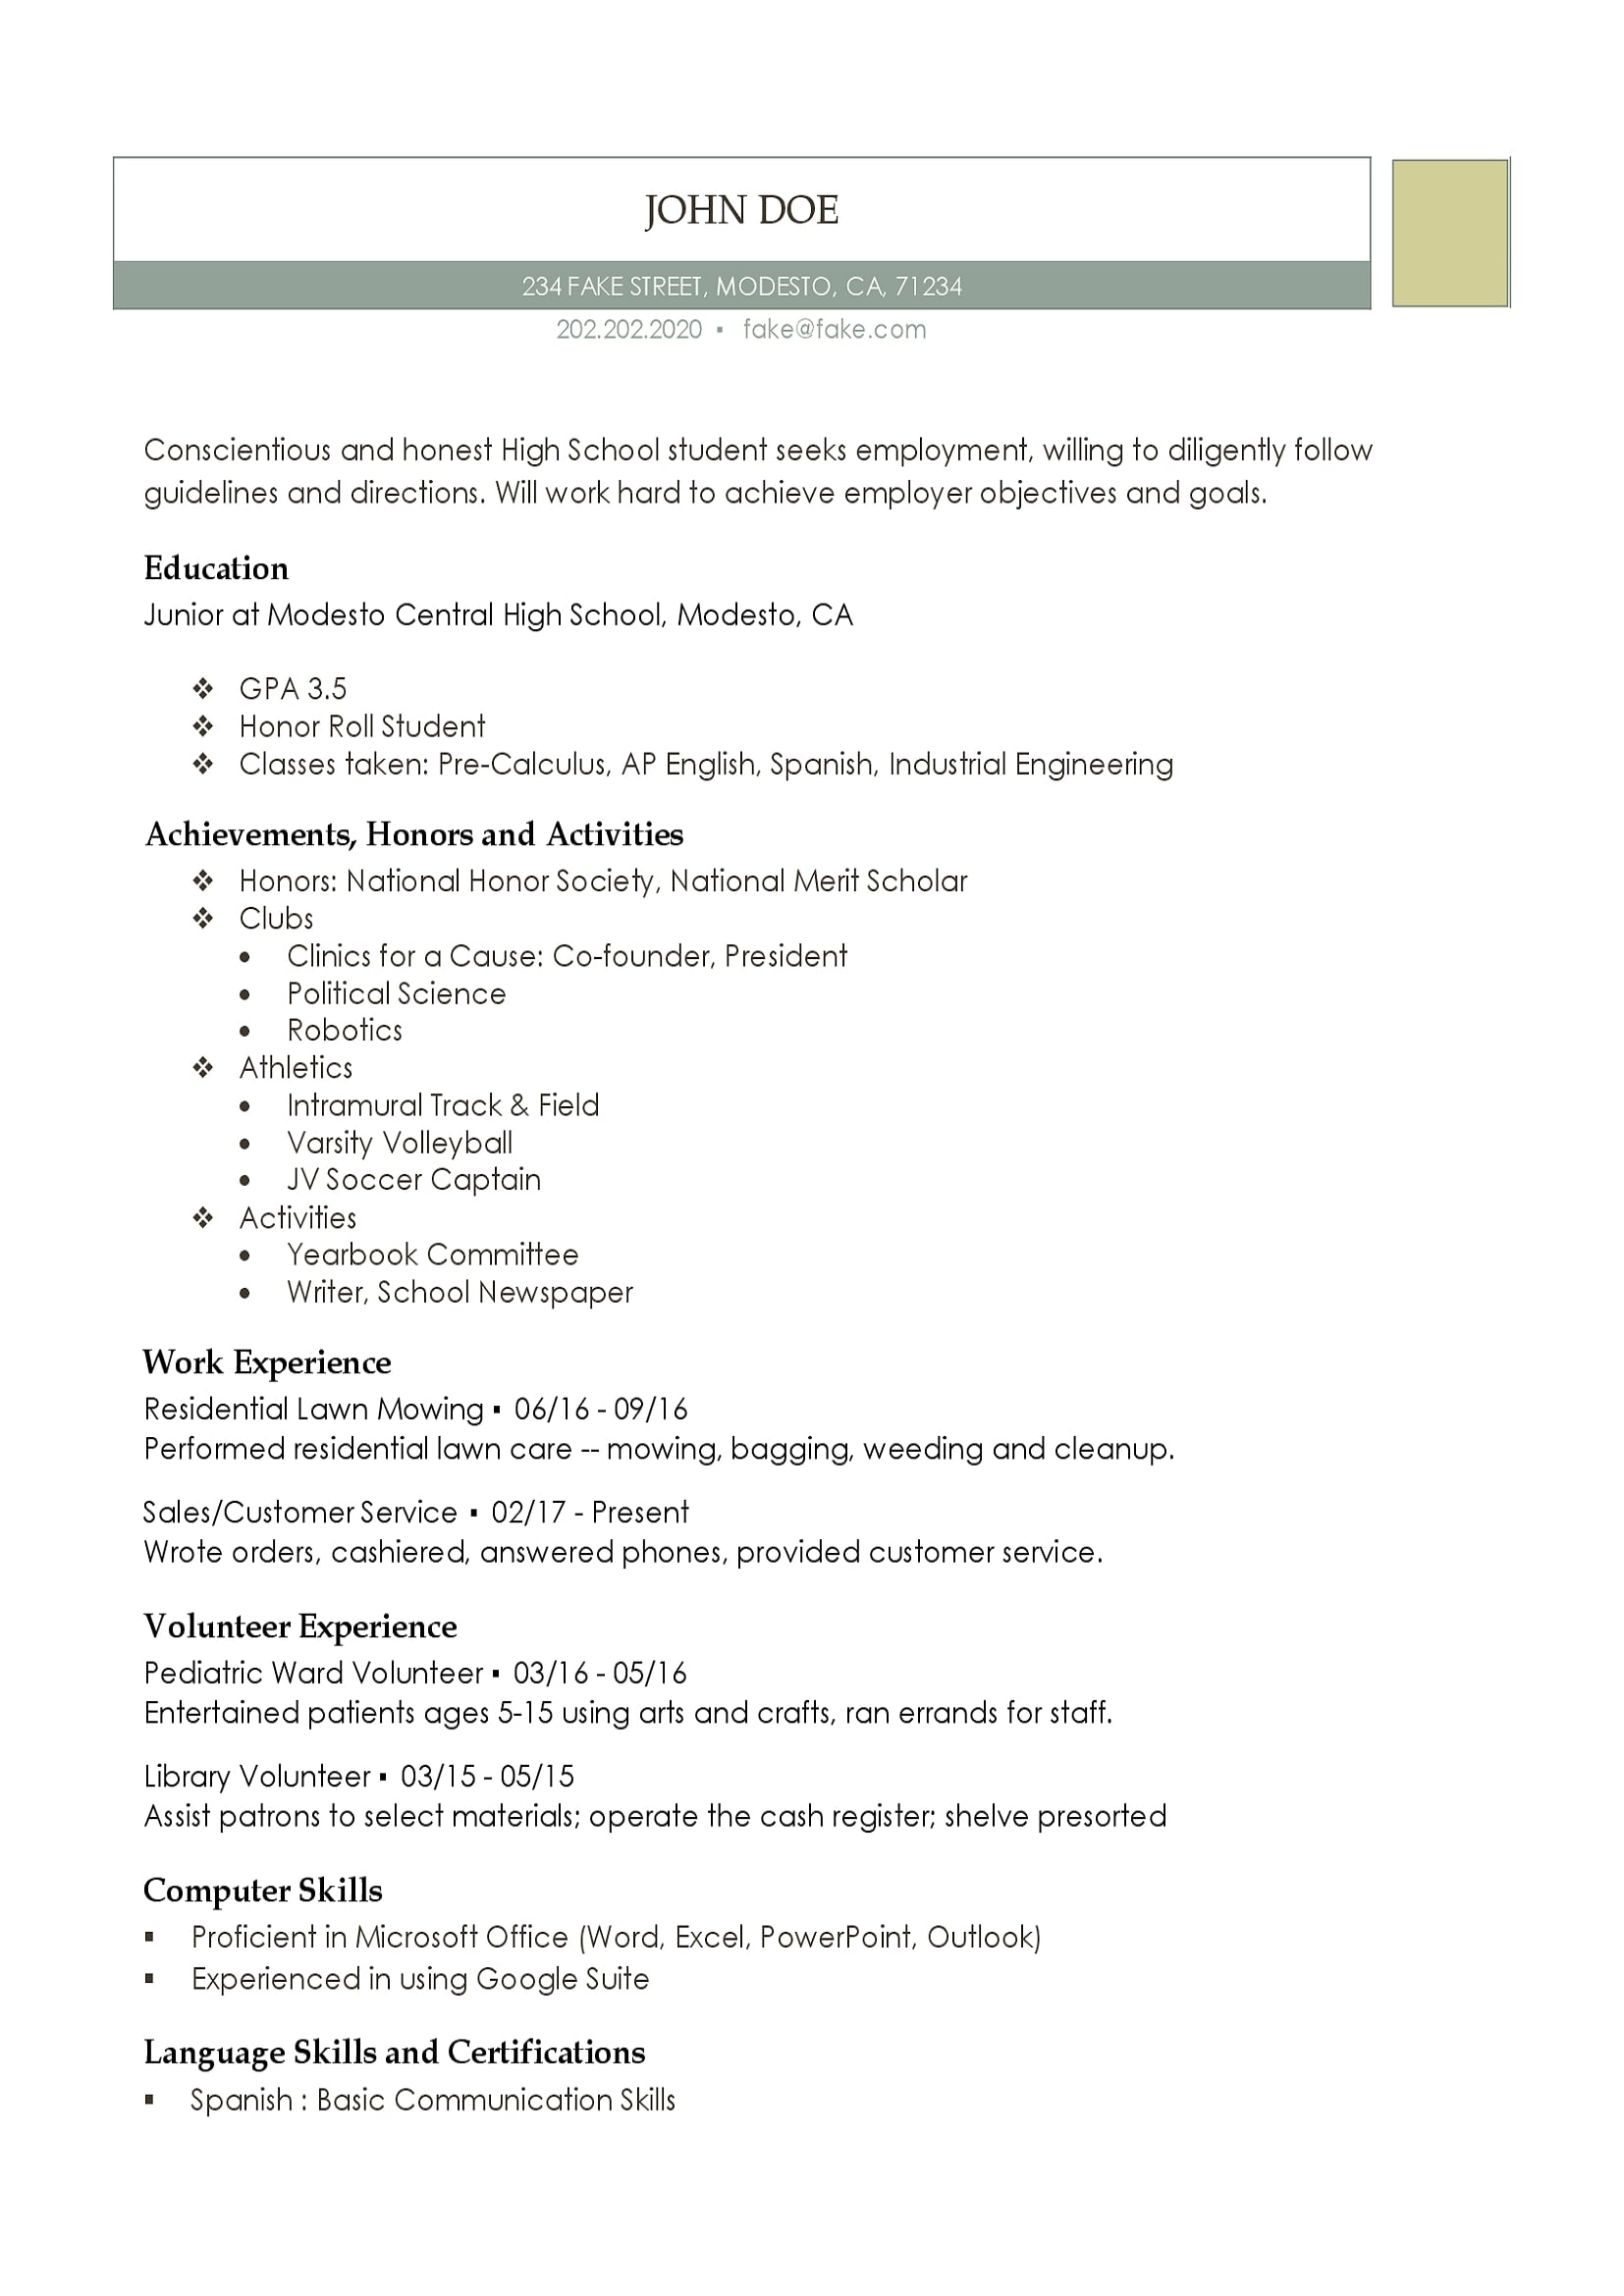 High School Resume B0e9830d Adf6 4df7 9670 9330a339578a high school resume|wikiresume.com